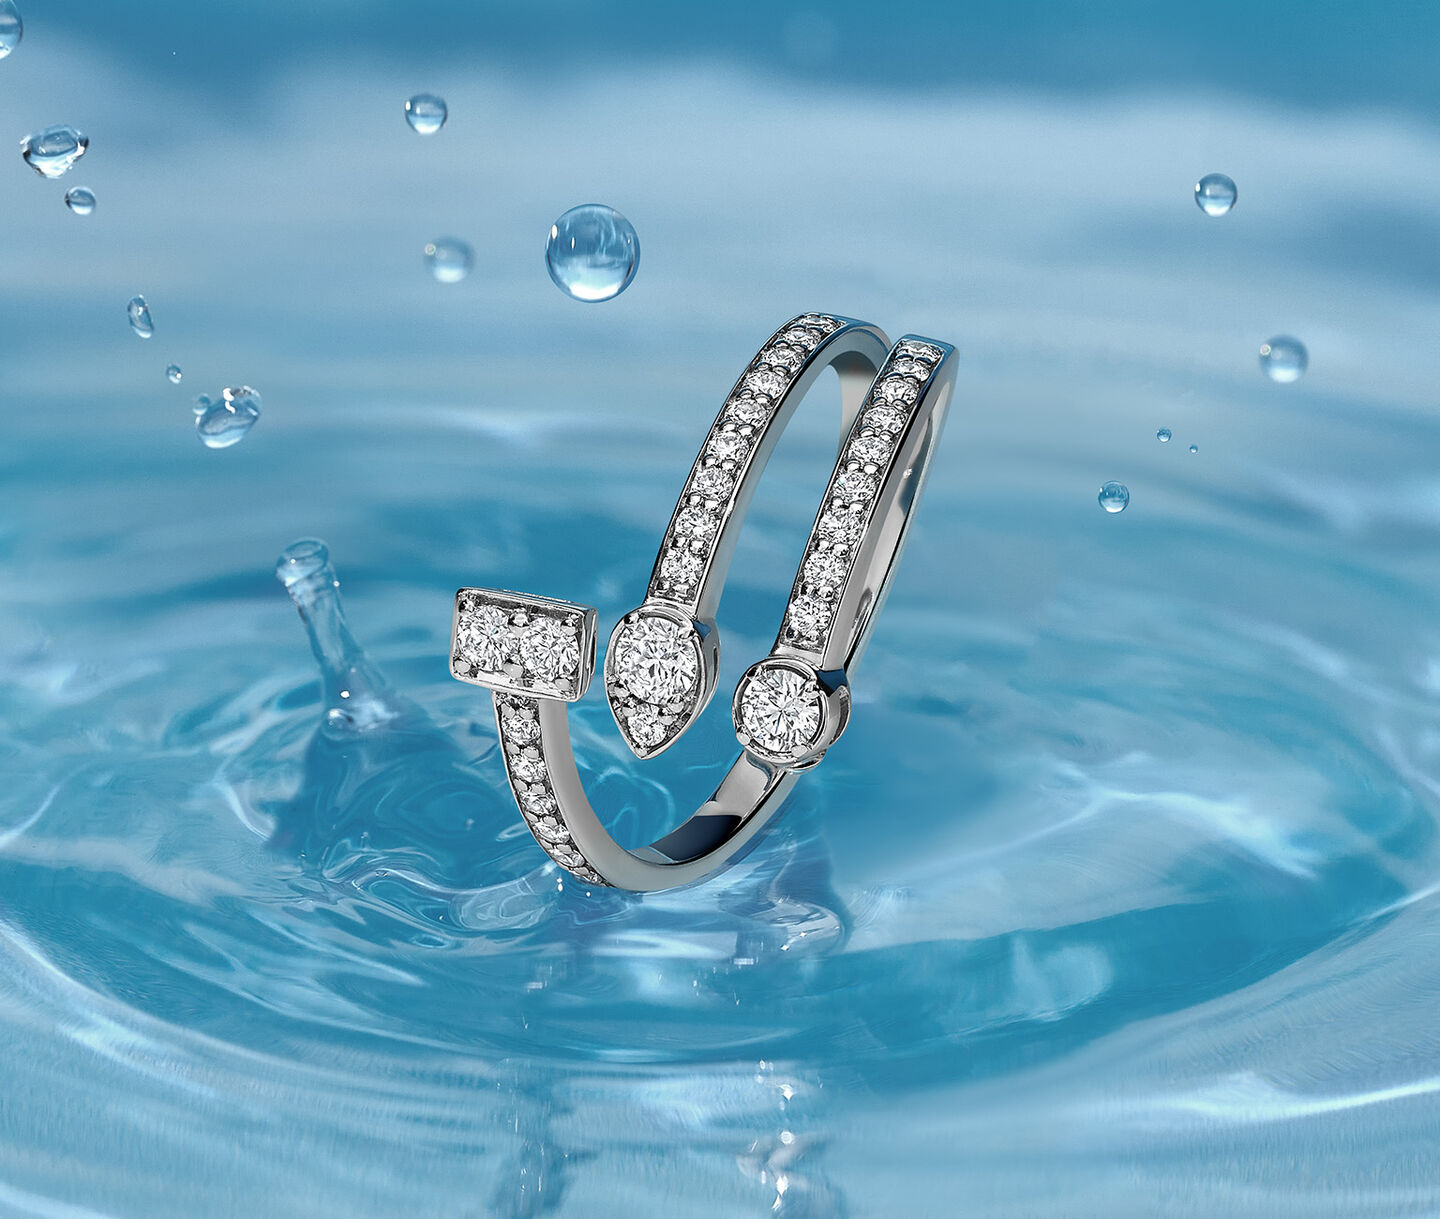 Birks Splash diamond ring on a watery background.